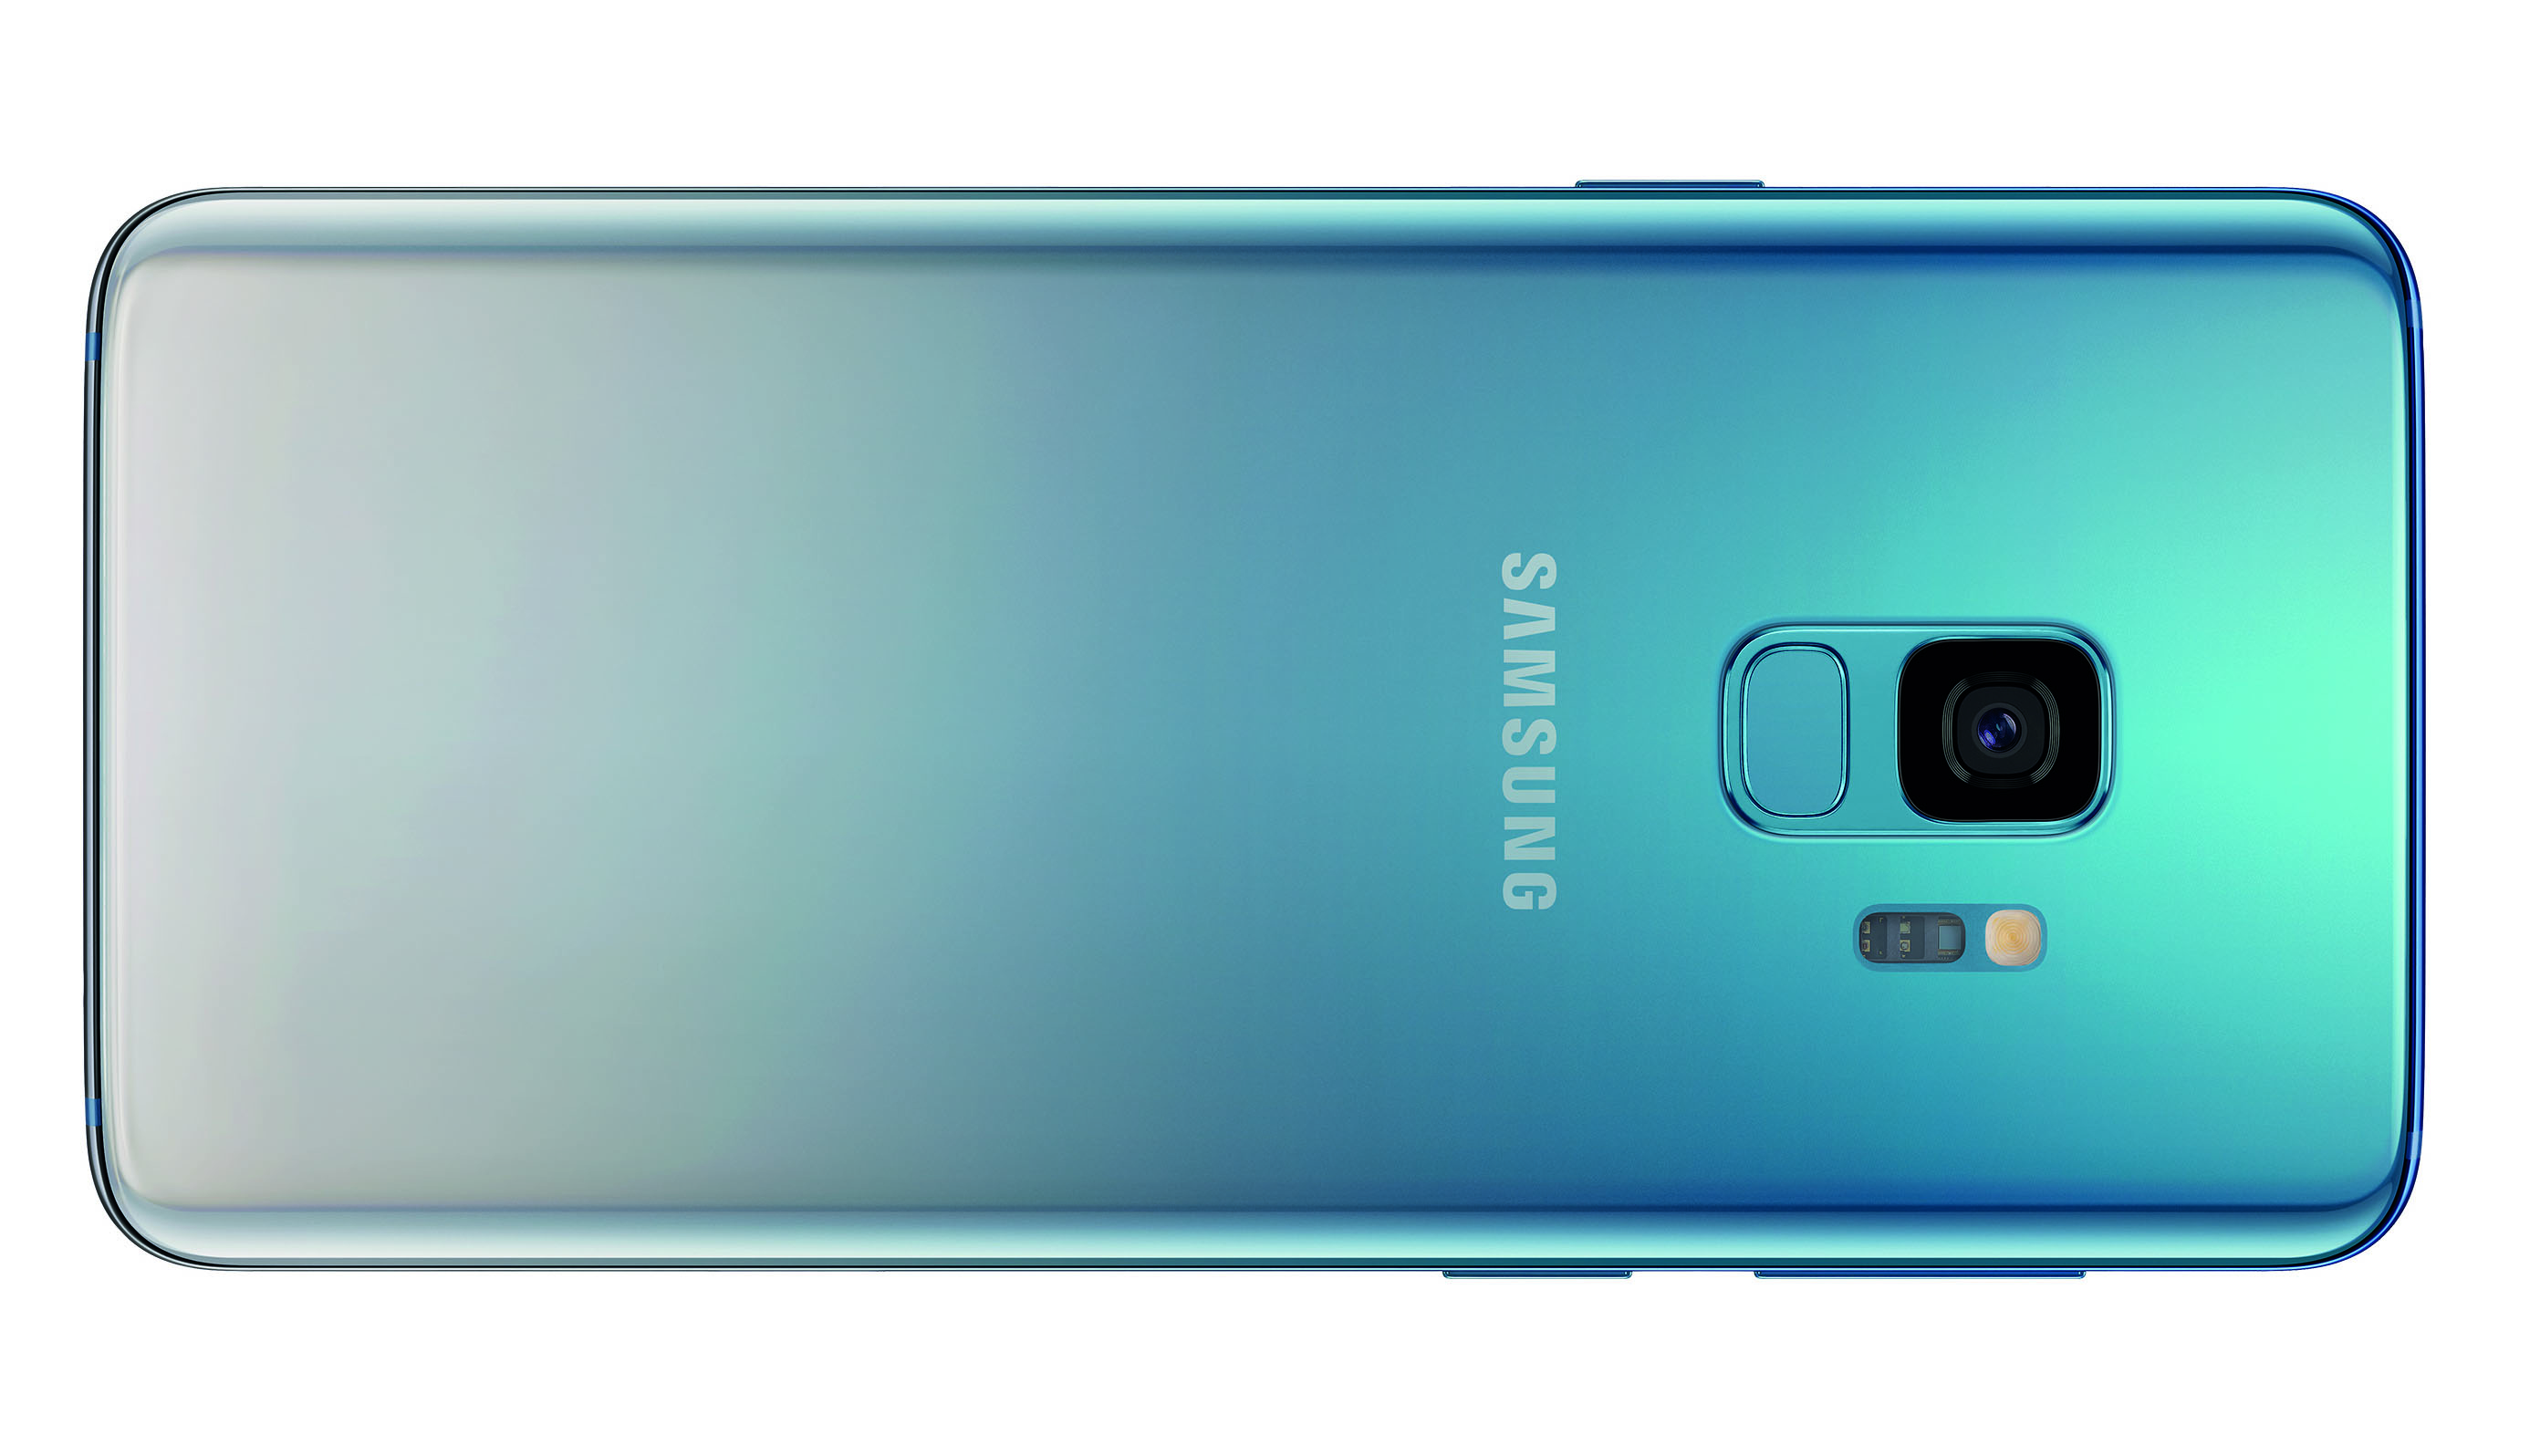 Samsung galaxy s9 серый. Samsung s9 Blue. Samsung s9 Plus Blue. Samsung Galaxy s9. Samsung Galaxy s9 Plus Blue.